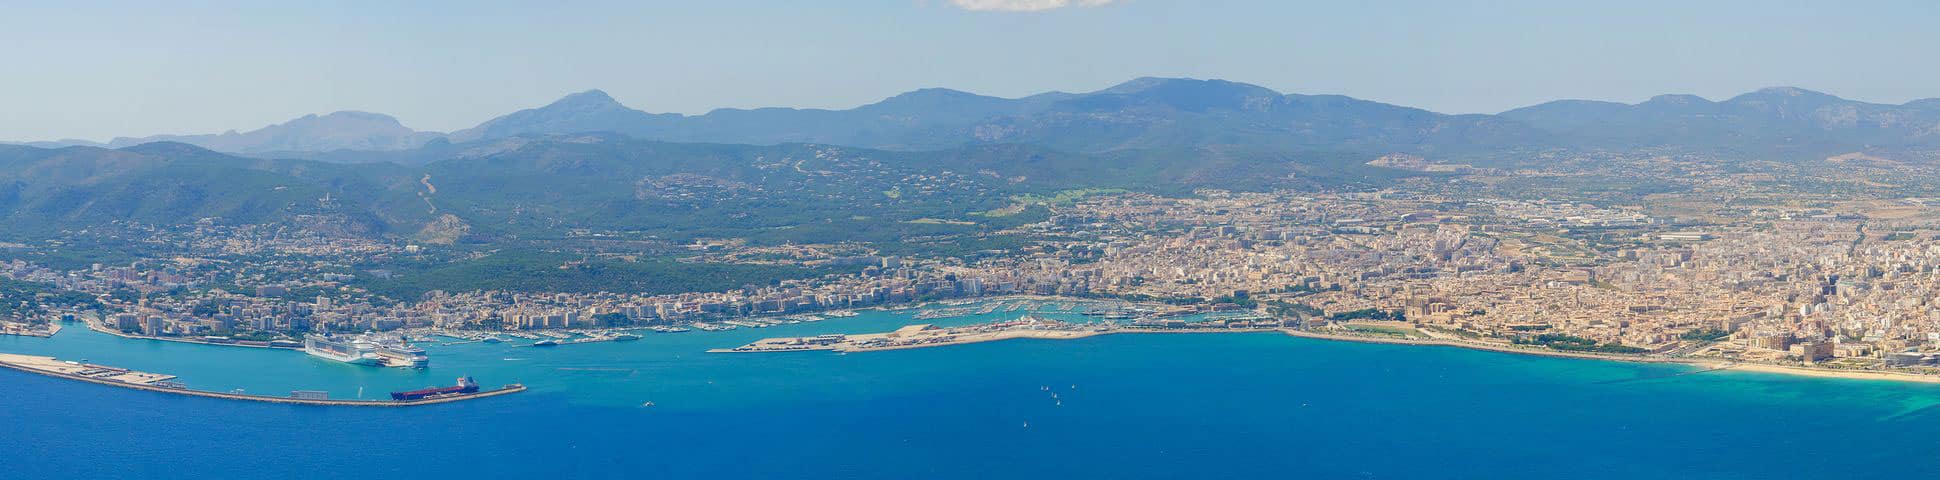 Panoramablick auf Palma de Mallorca